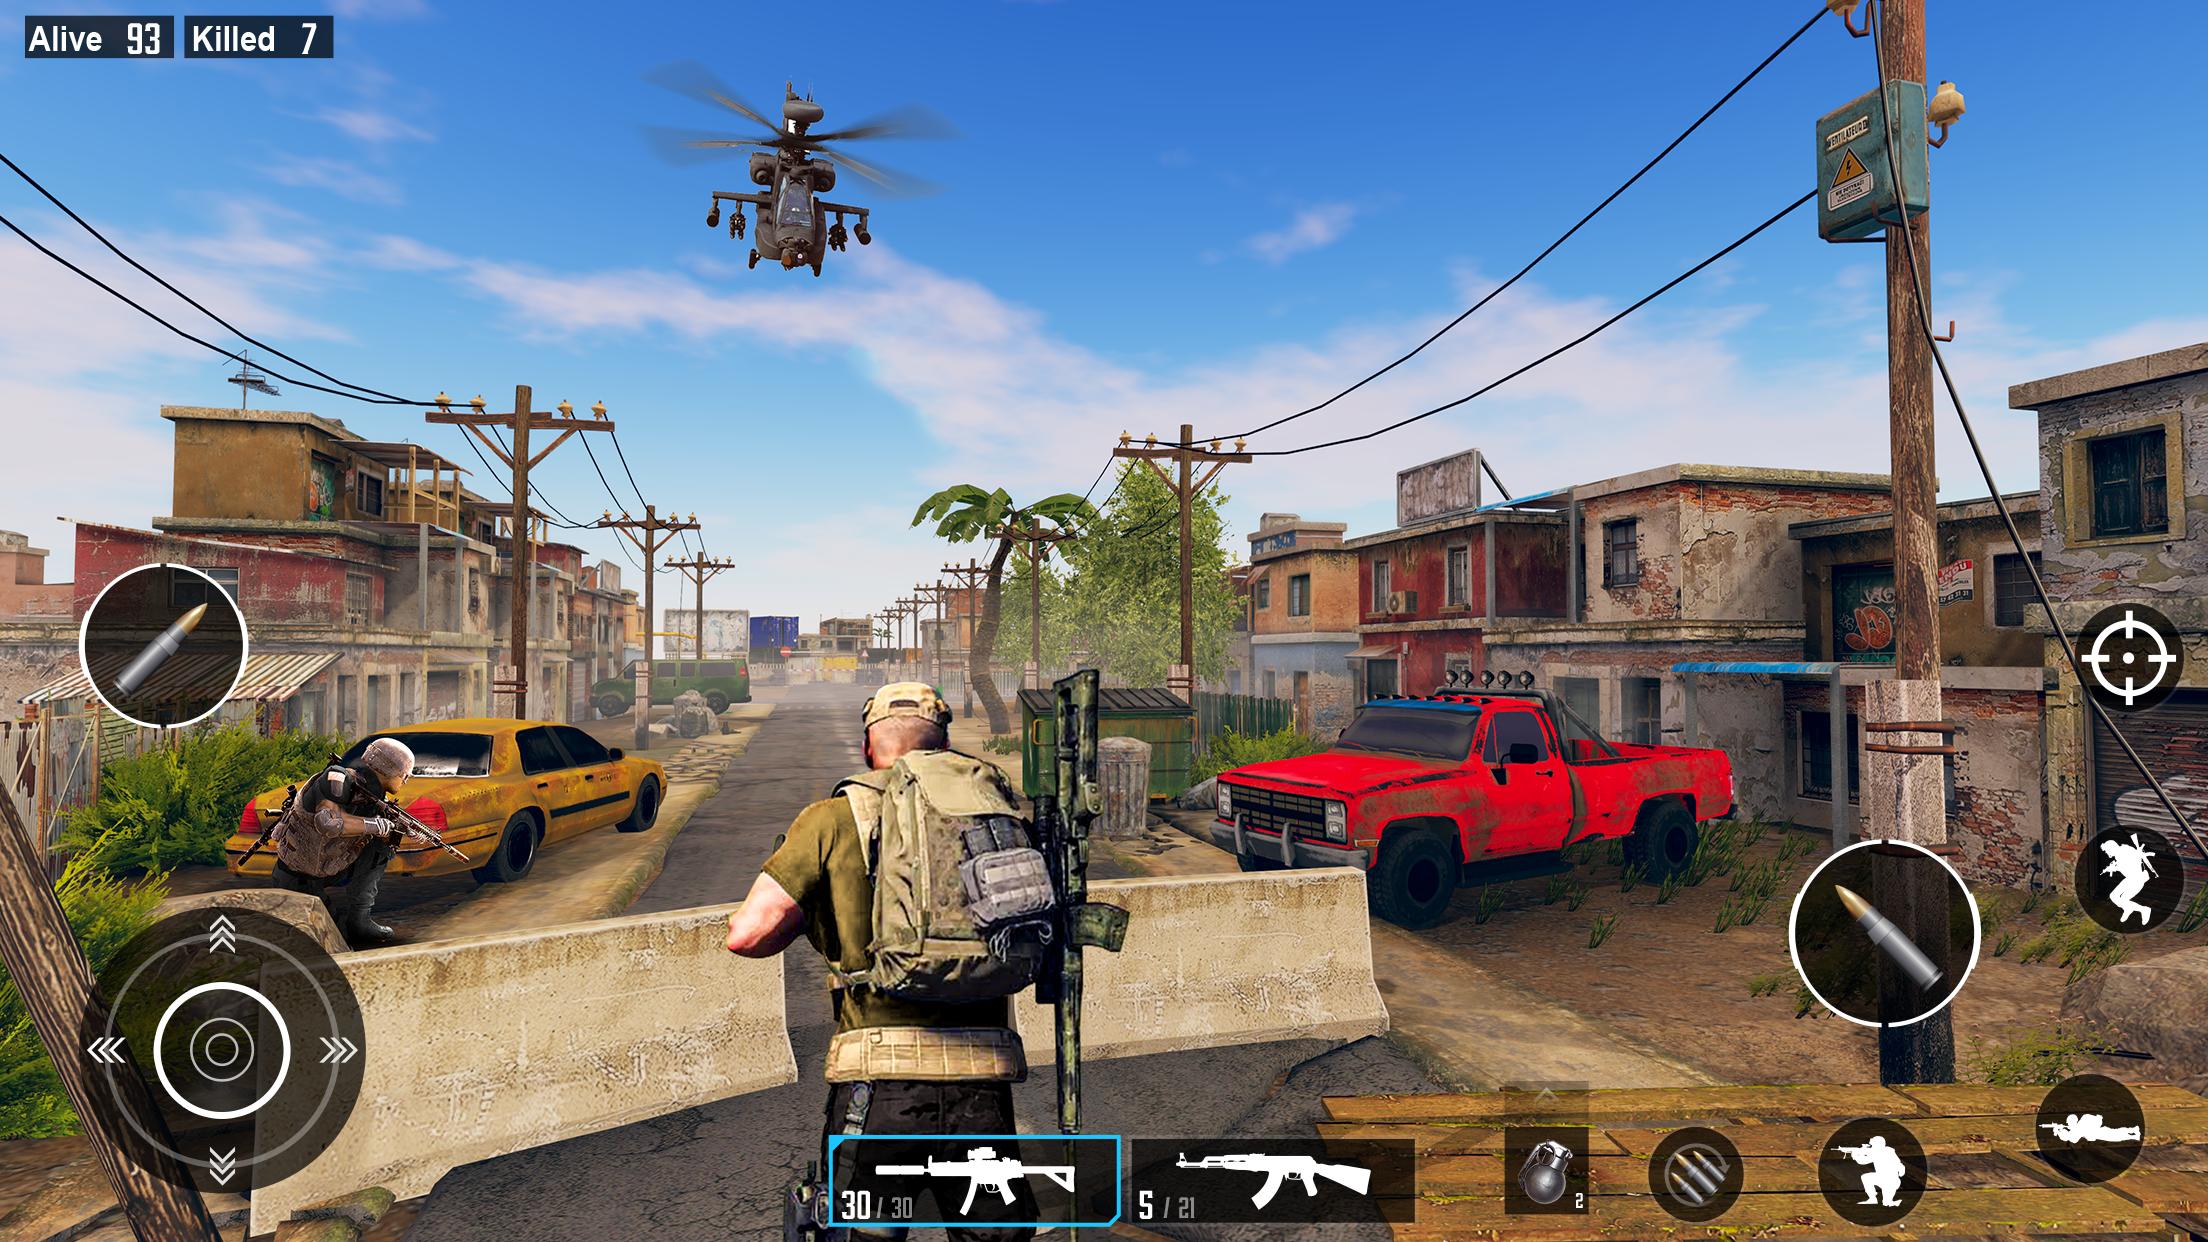 Real Commando Mission - Free Shooting Games 2020 3.5 Screenshot 5